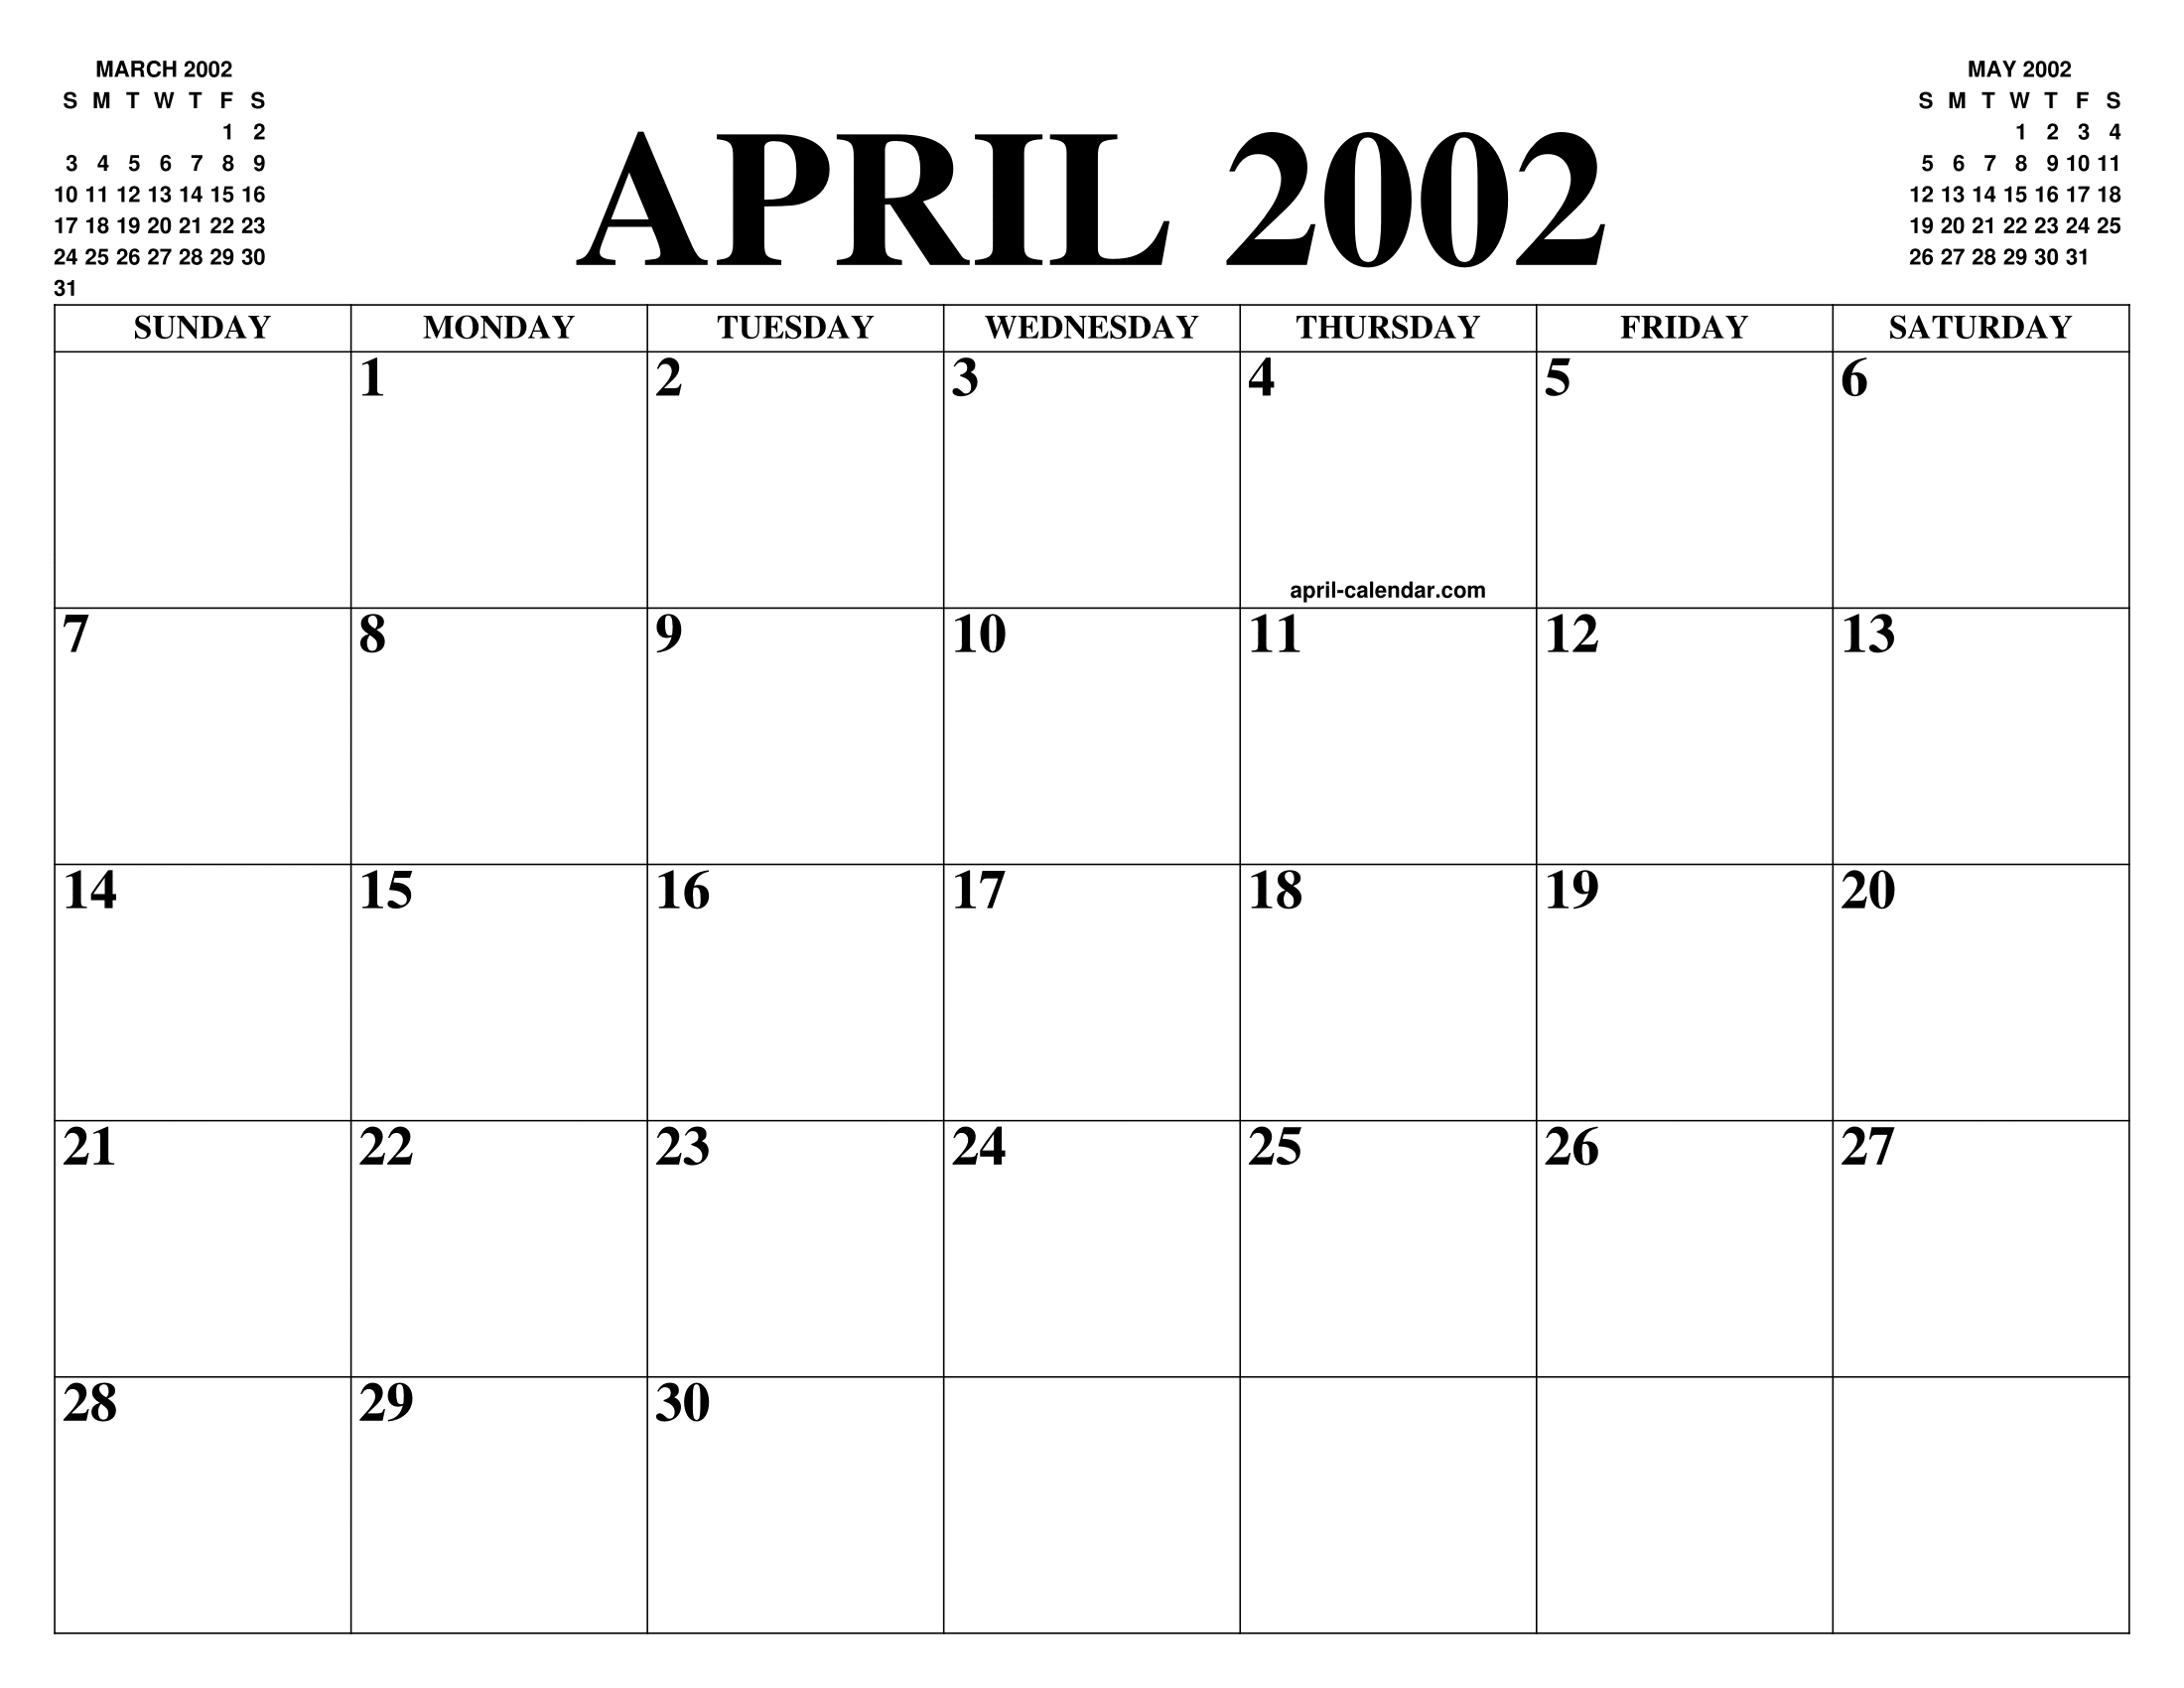 APRIL 2002 CALENDAR OF THE MONTH: FREE PRINTABLE APRIL CALENDAR OF THE